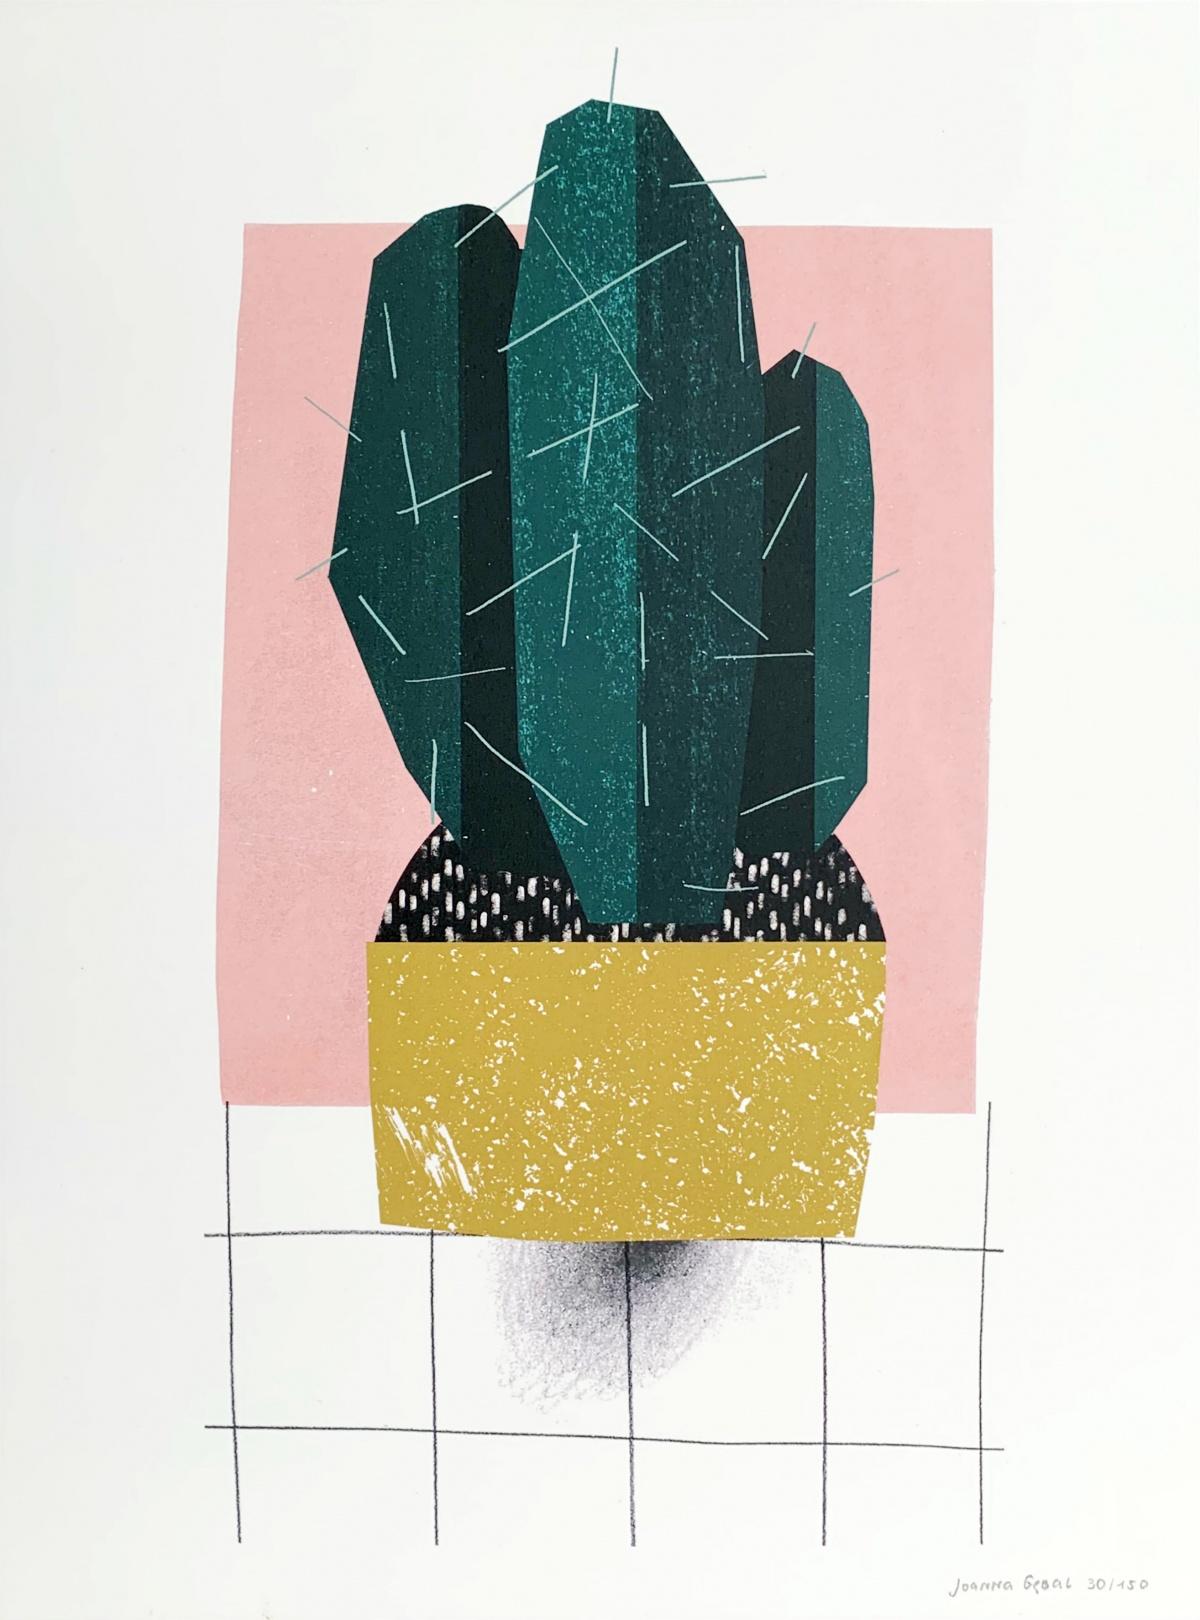 Joanna Gebal Figurative Print - Cactus - Digital print, Young art, Figurative art, Plants, Colorful